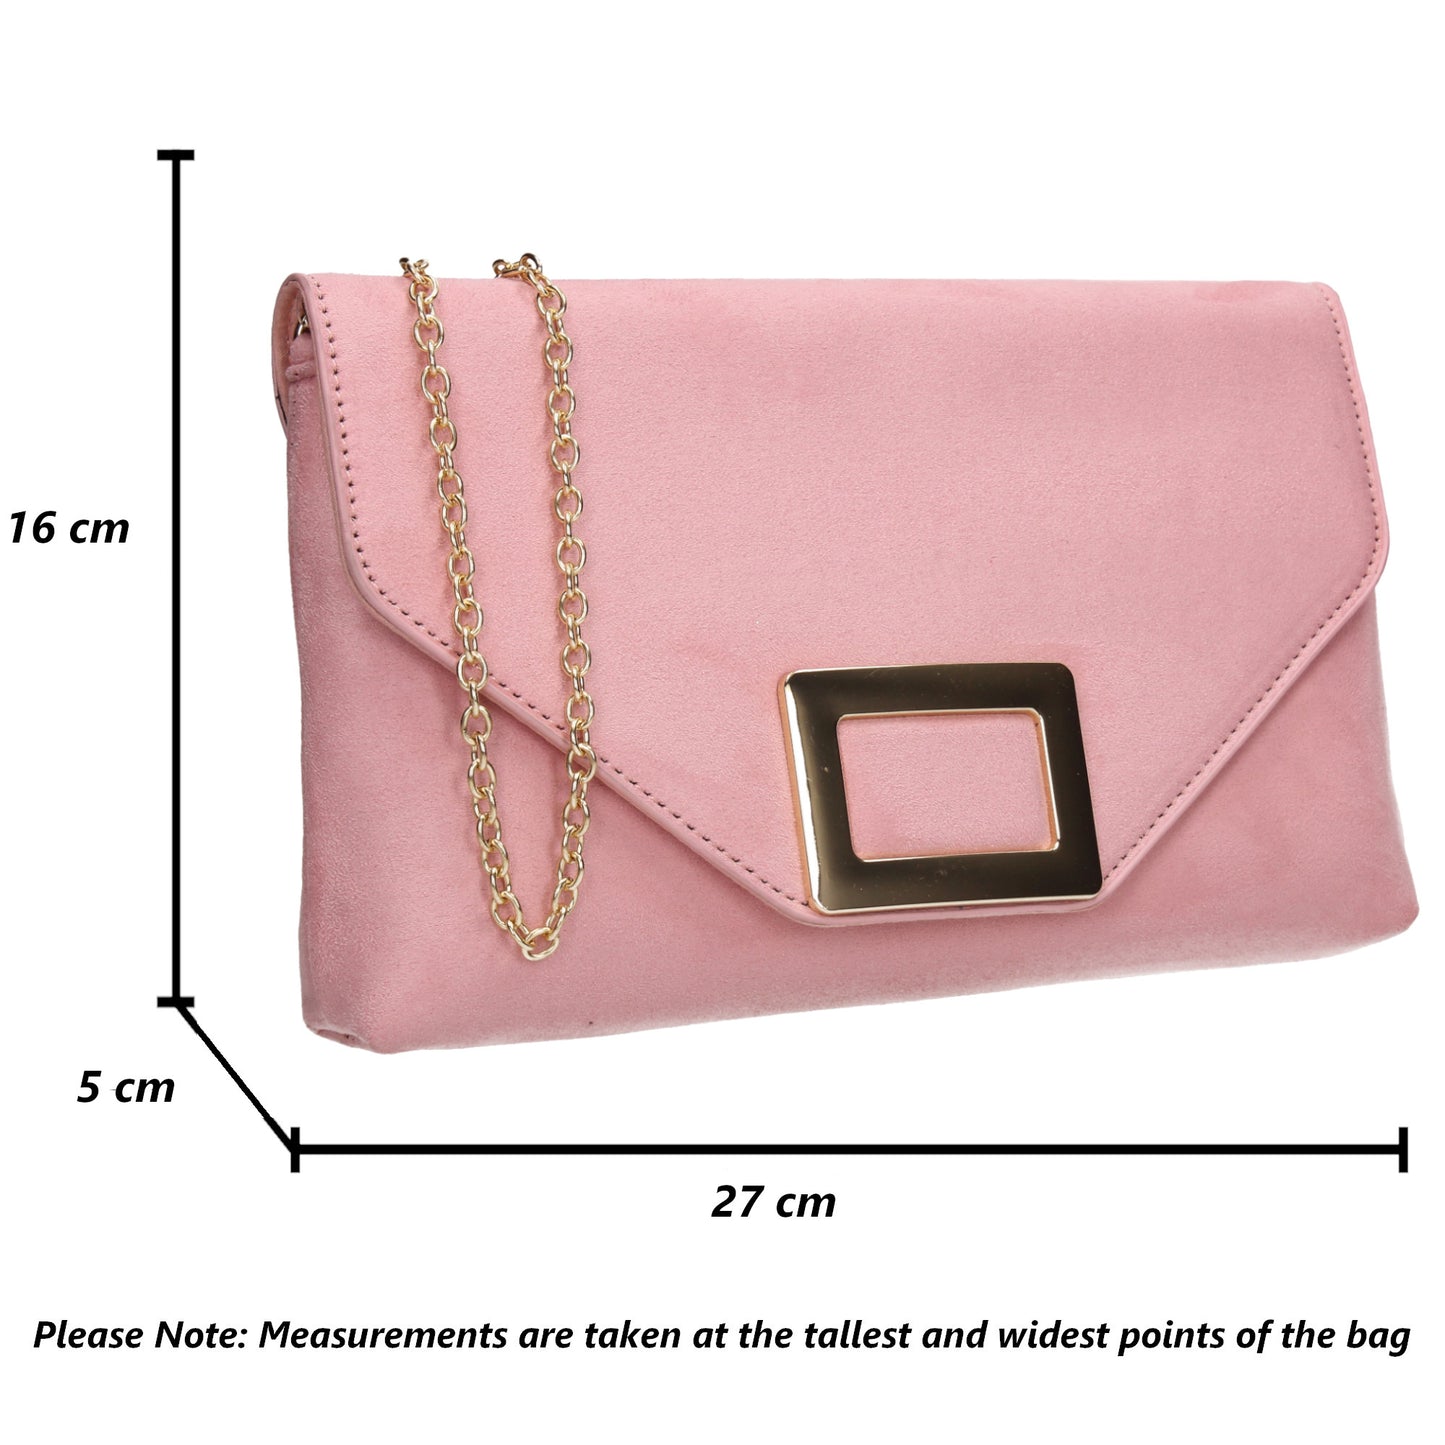 SWANKYSWANS Georgia Clutch Bag Pink Cute Cheap Clutch Bag For Weddings School and Work